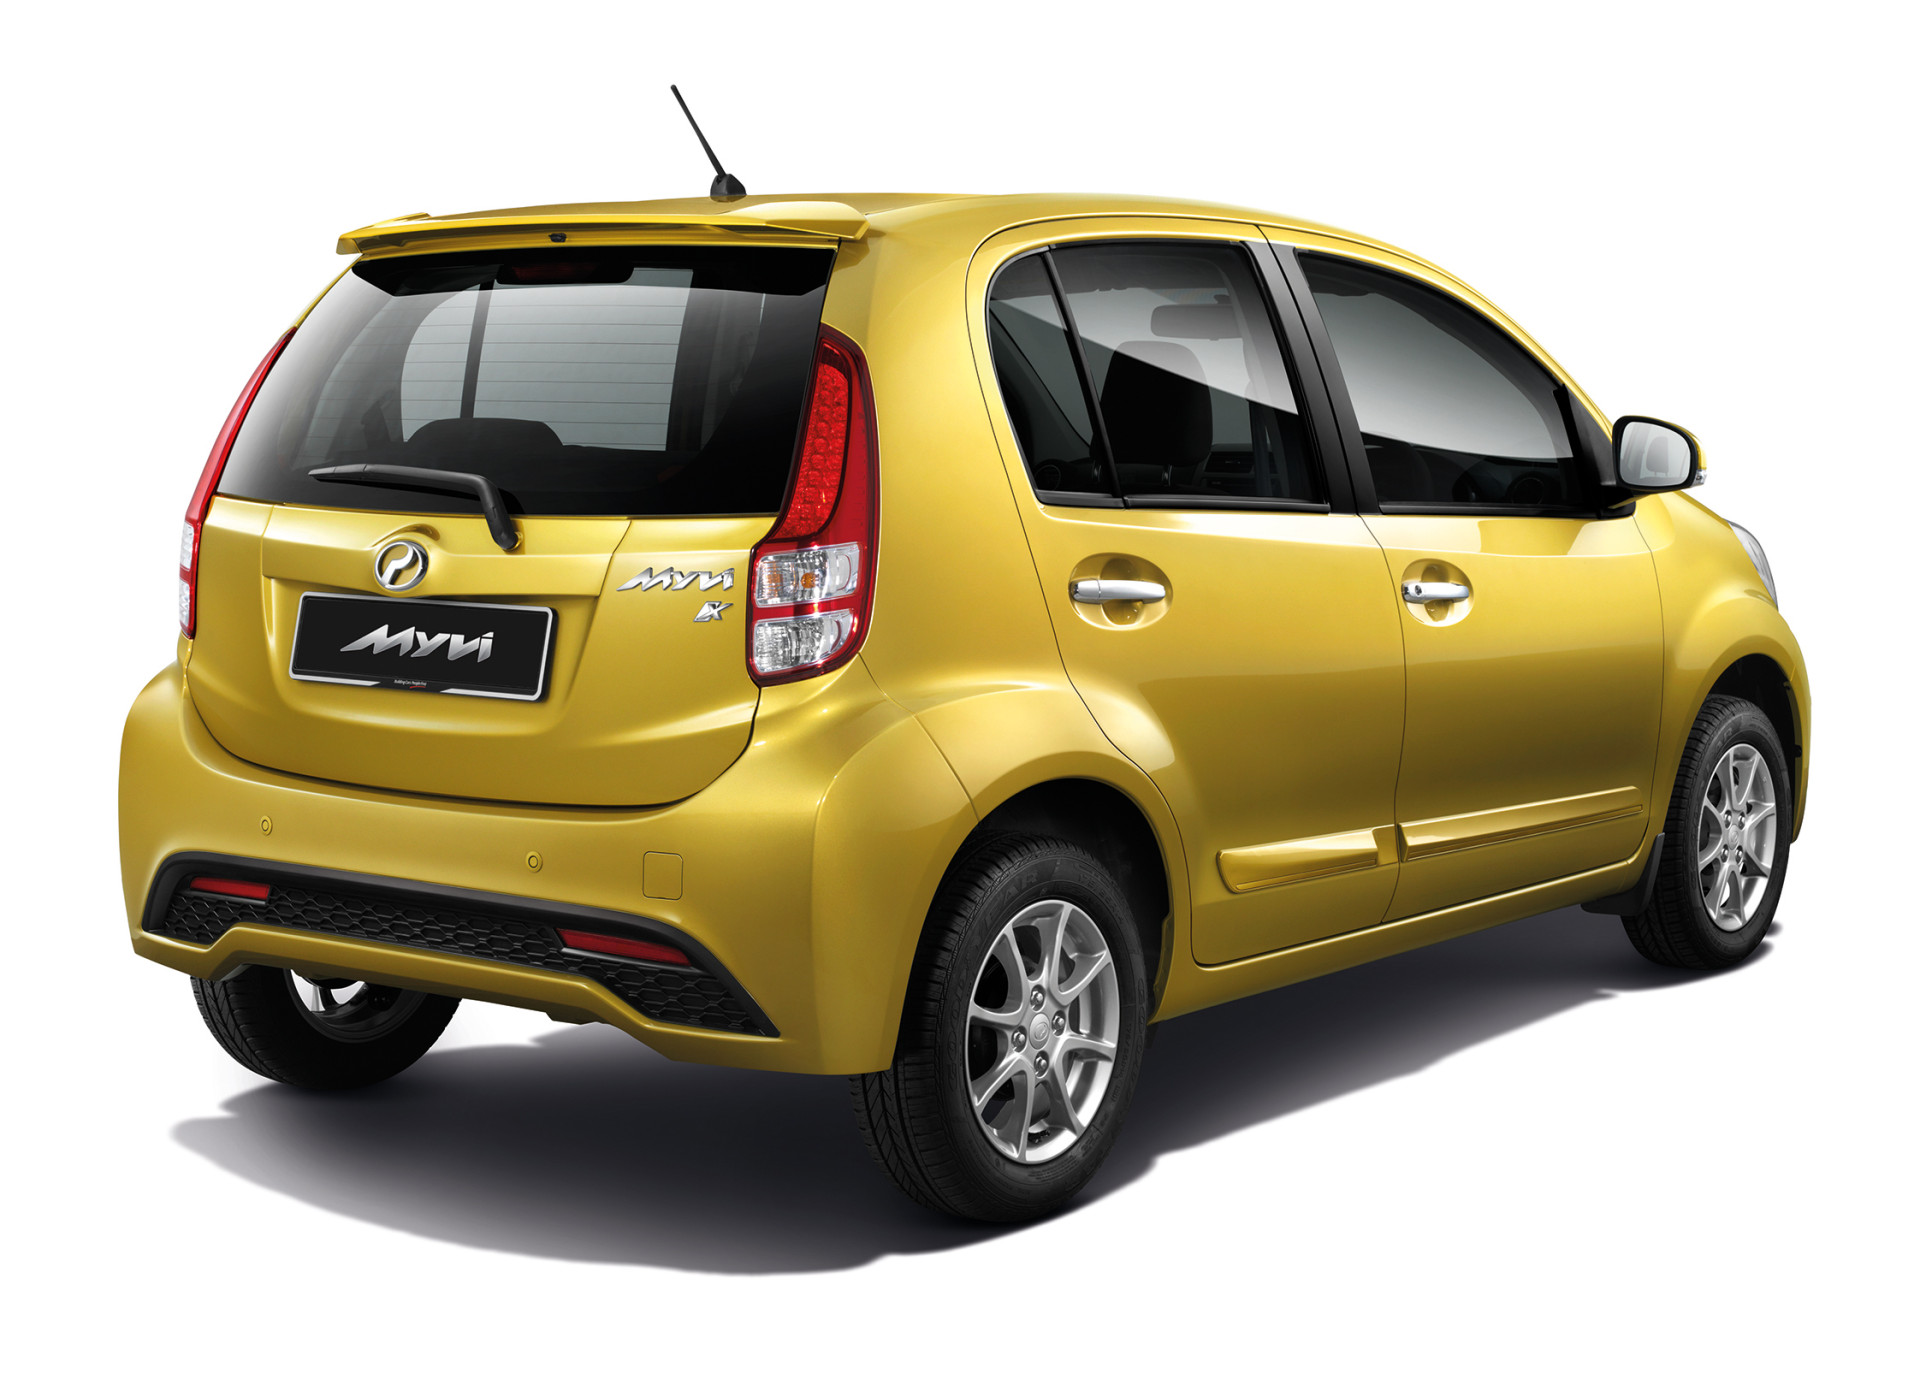 Perodua Myvi For Sale In Singapore - Raffael Roni